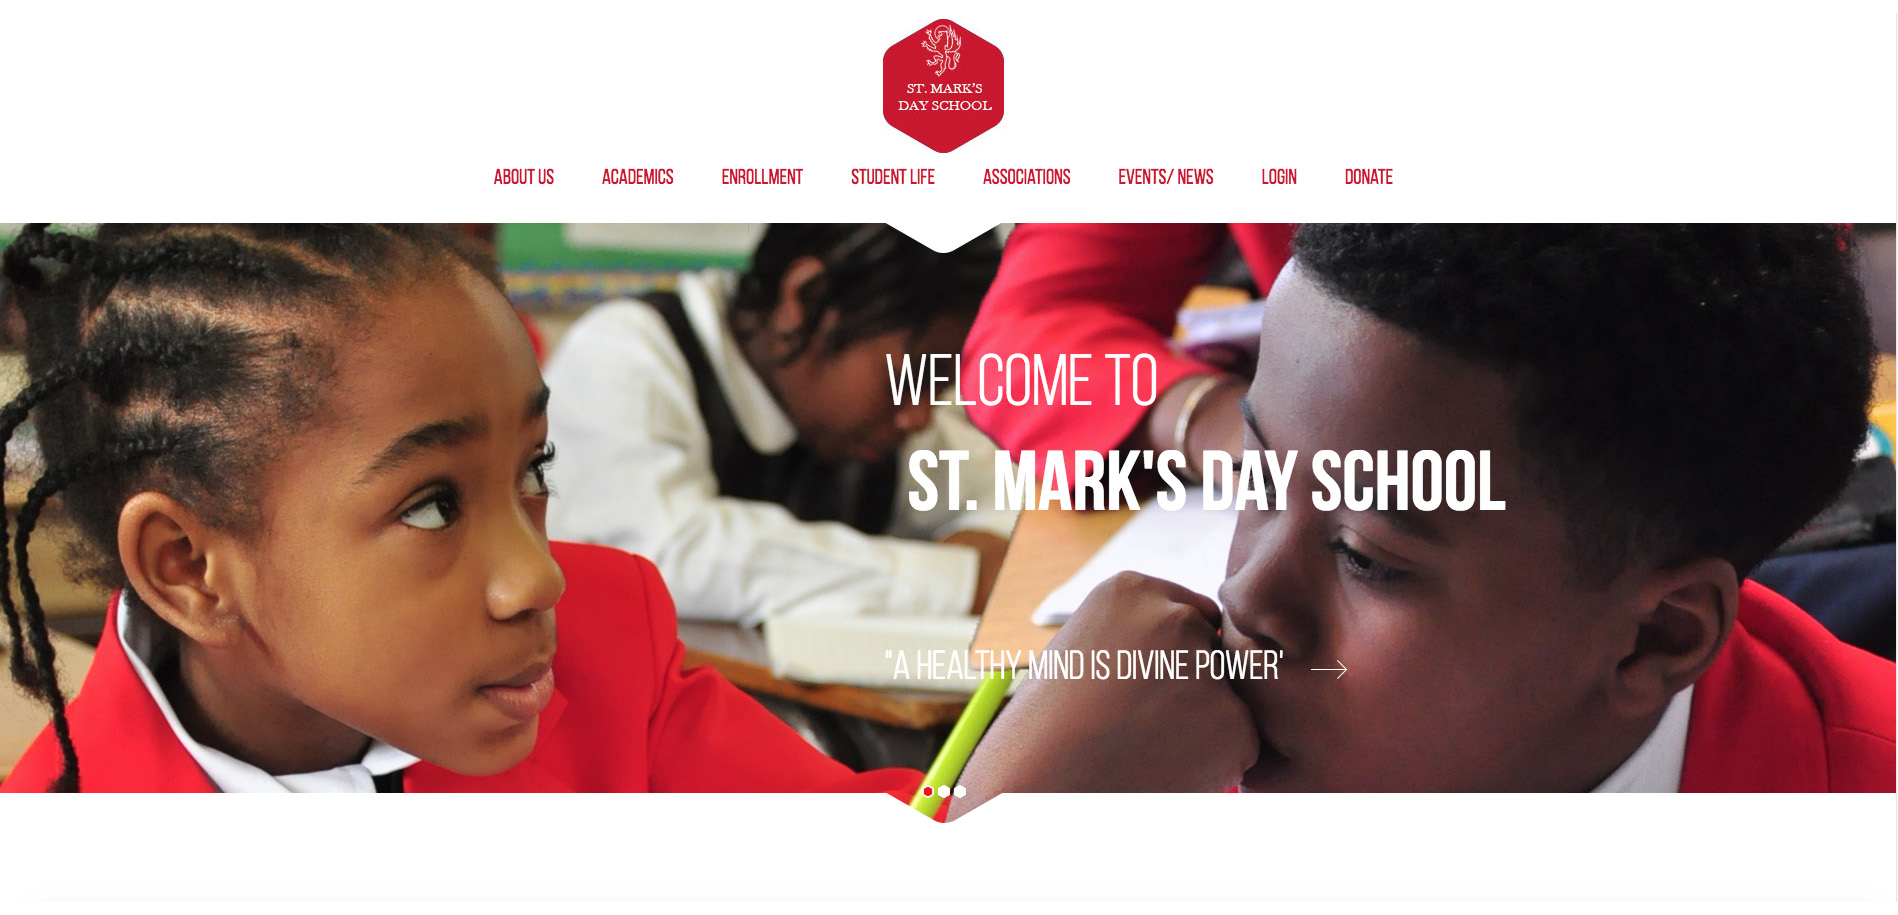 St. Marks Day School